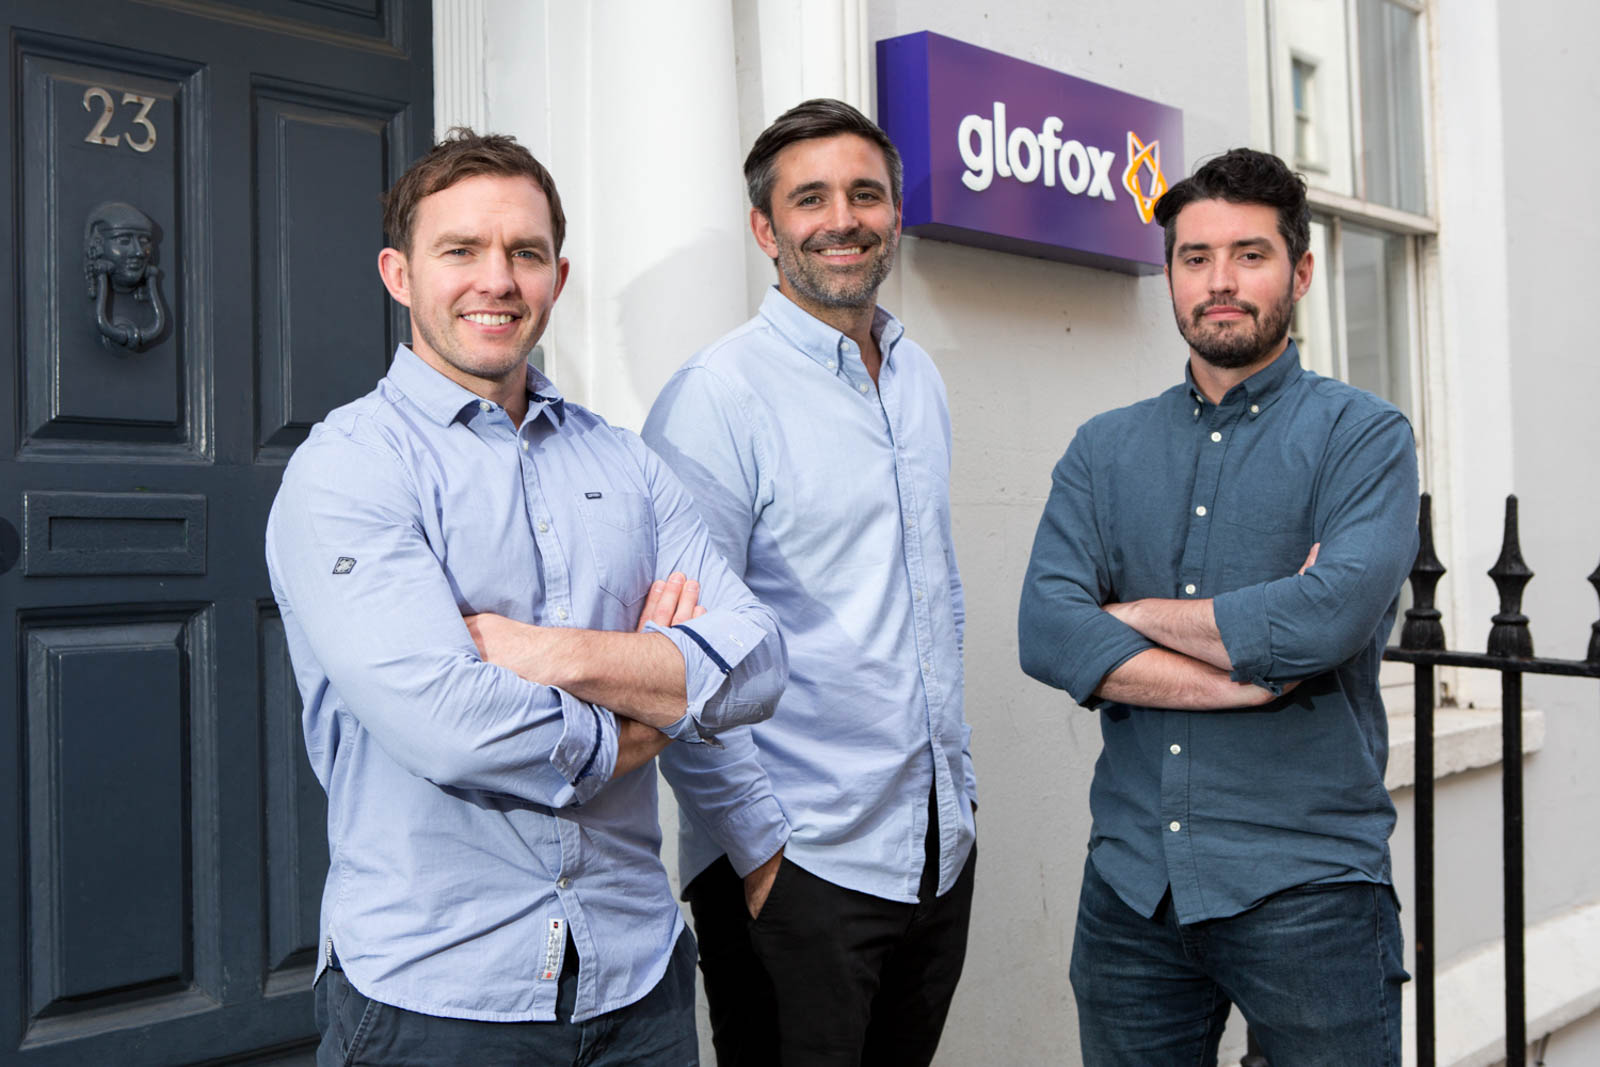 Glofox, app, startup, Dublin, press shot